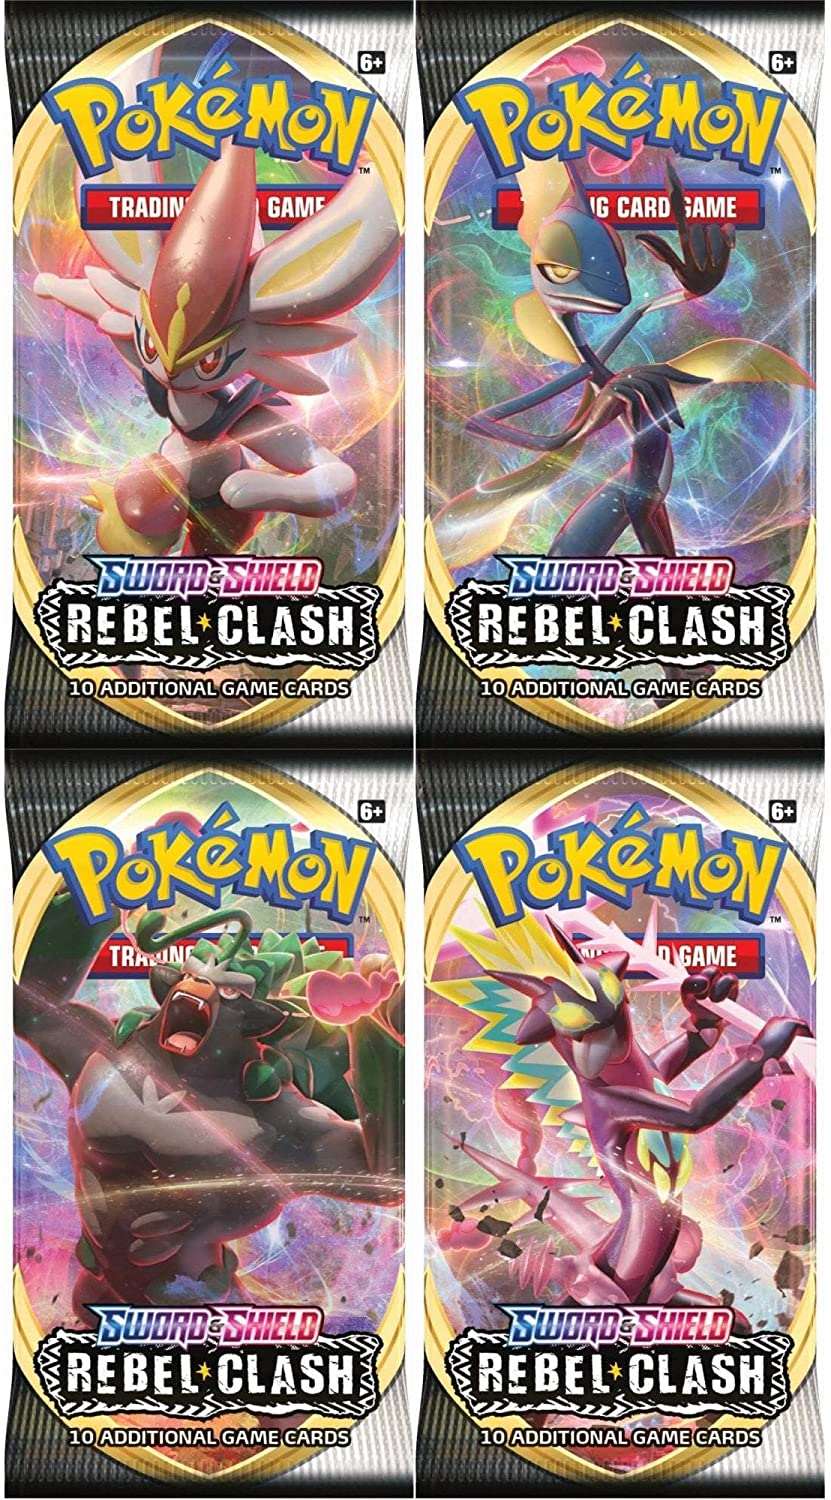 Young Will Presents Pokémon - Pokémon TCG: Sword & Shield-Rebel